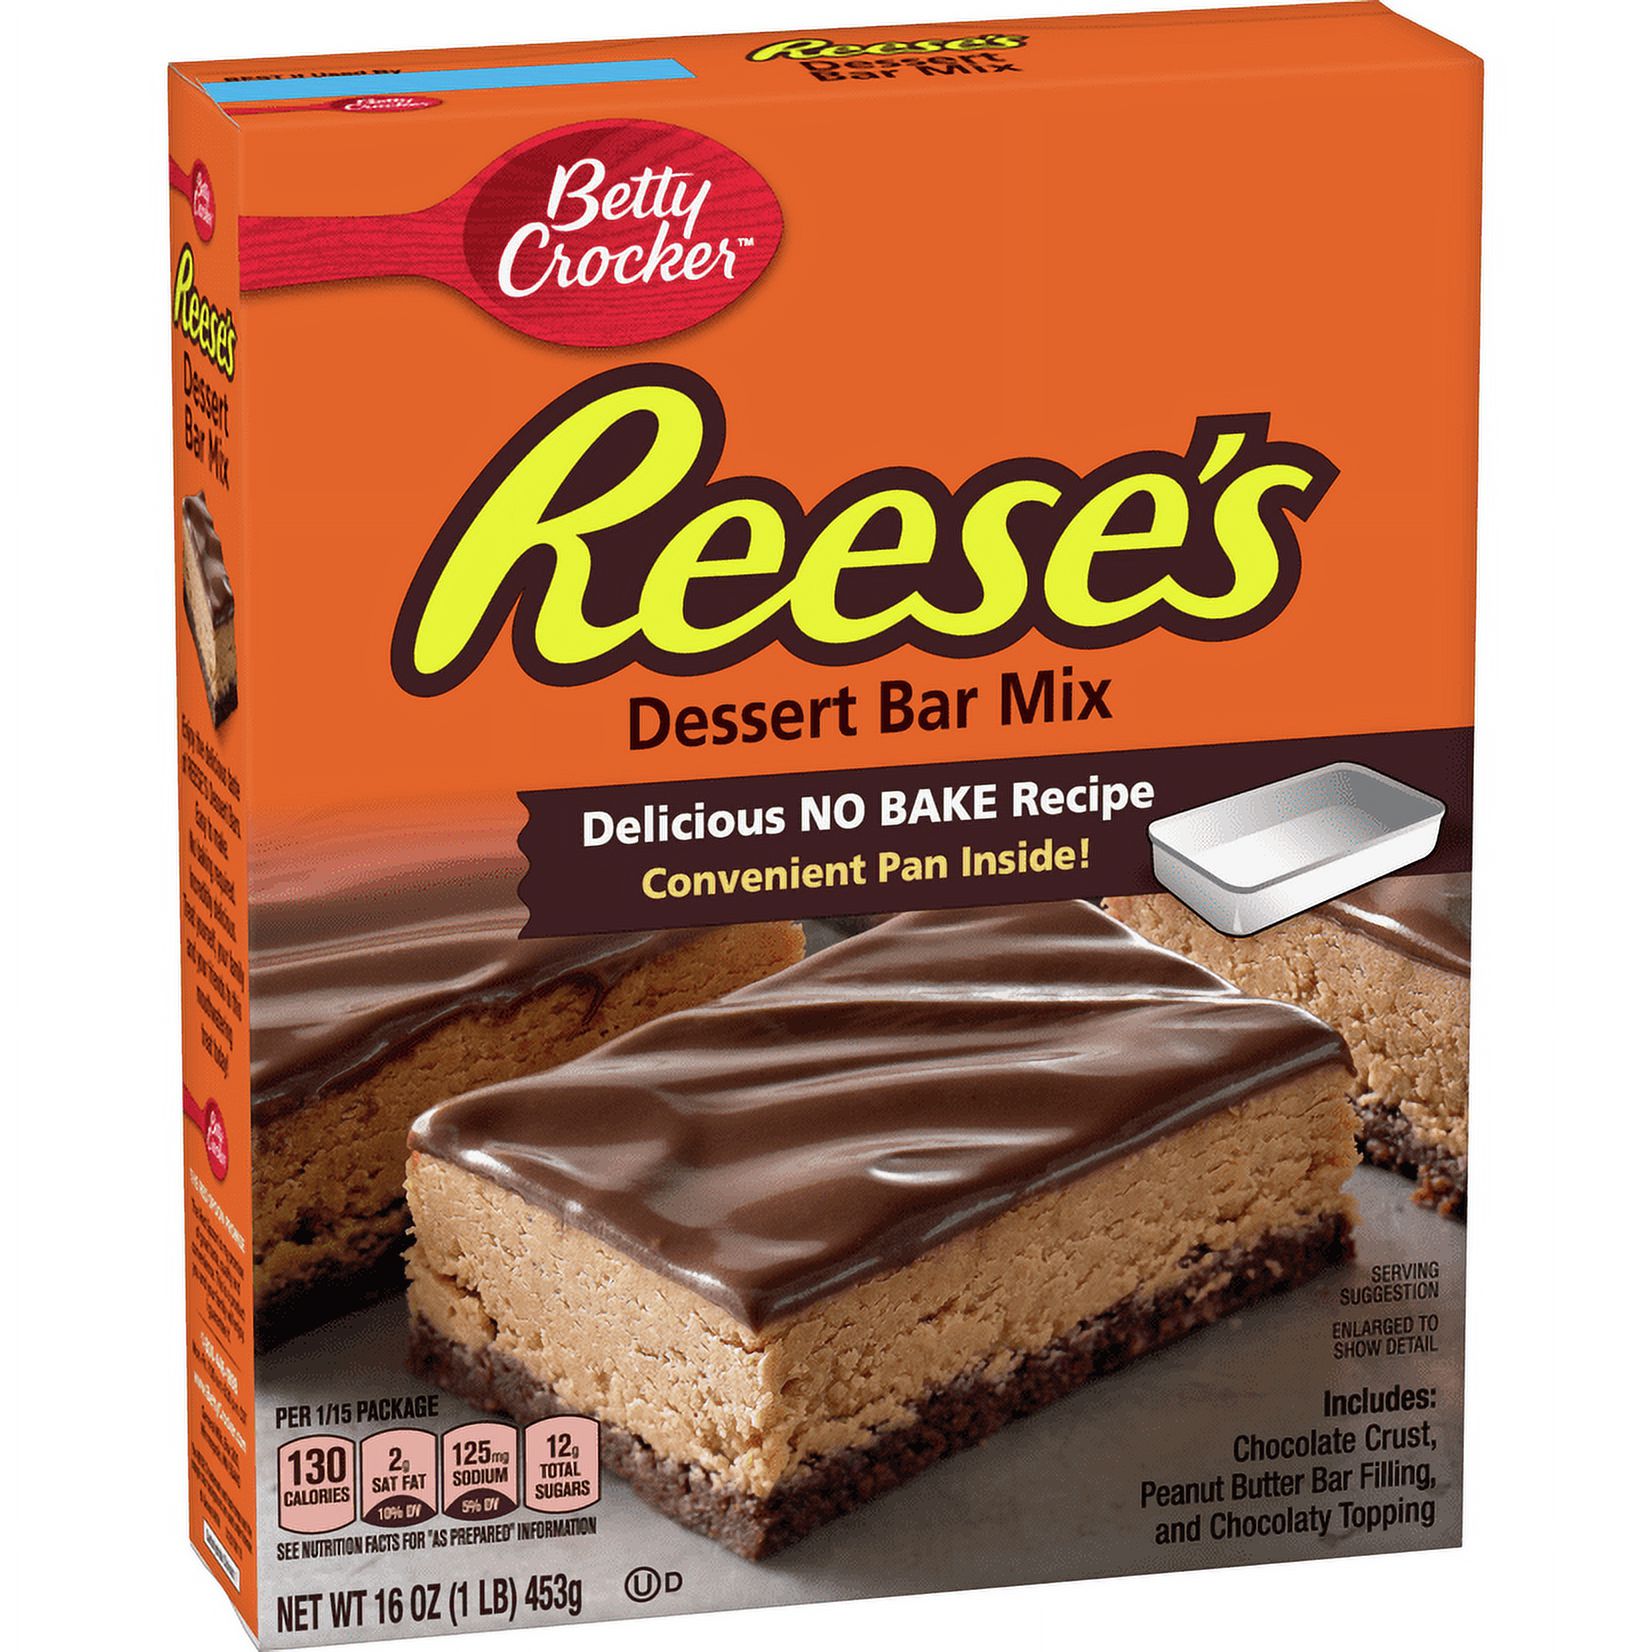 Betty Crocker Ready to Bake Reese's Dessert Bar Mix, 16 oz - image 2 of 5